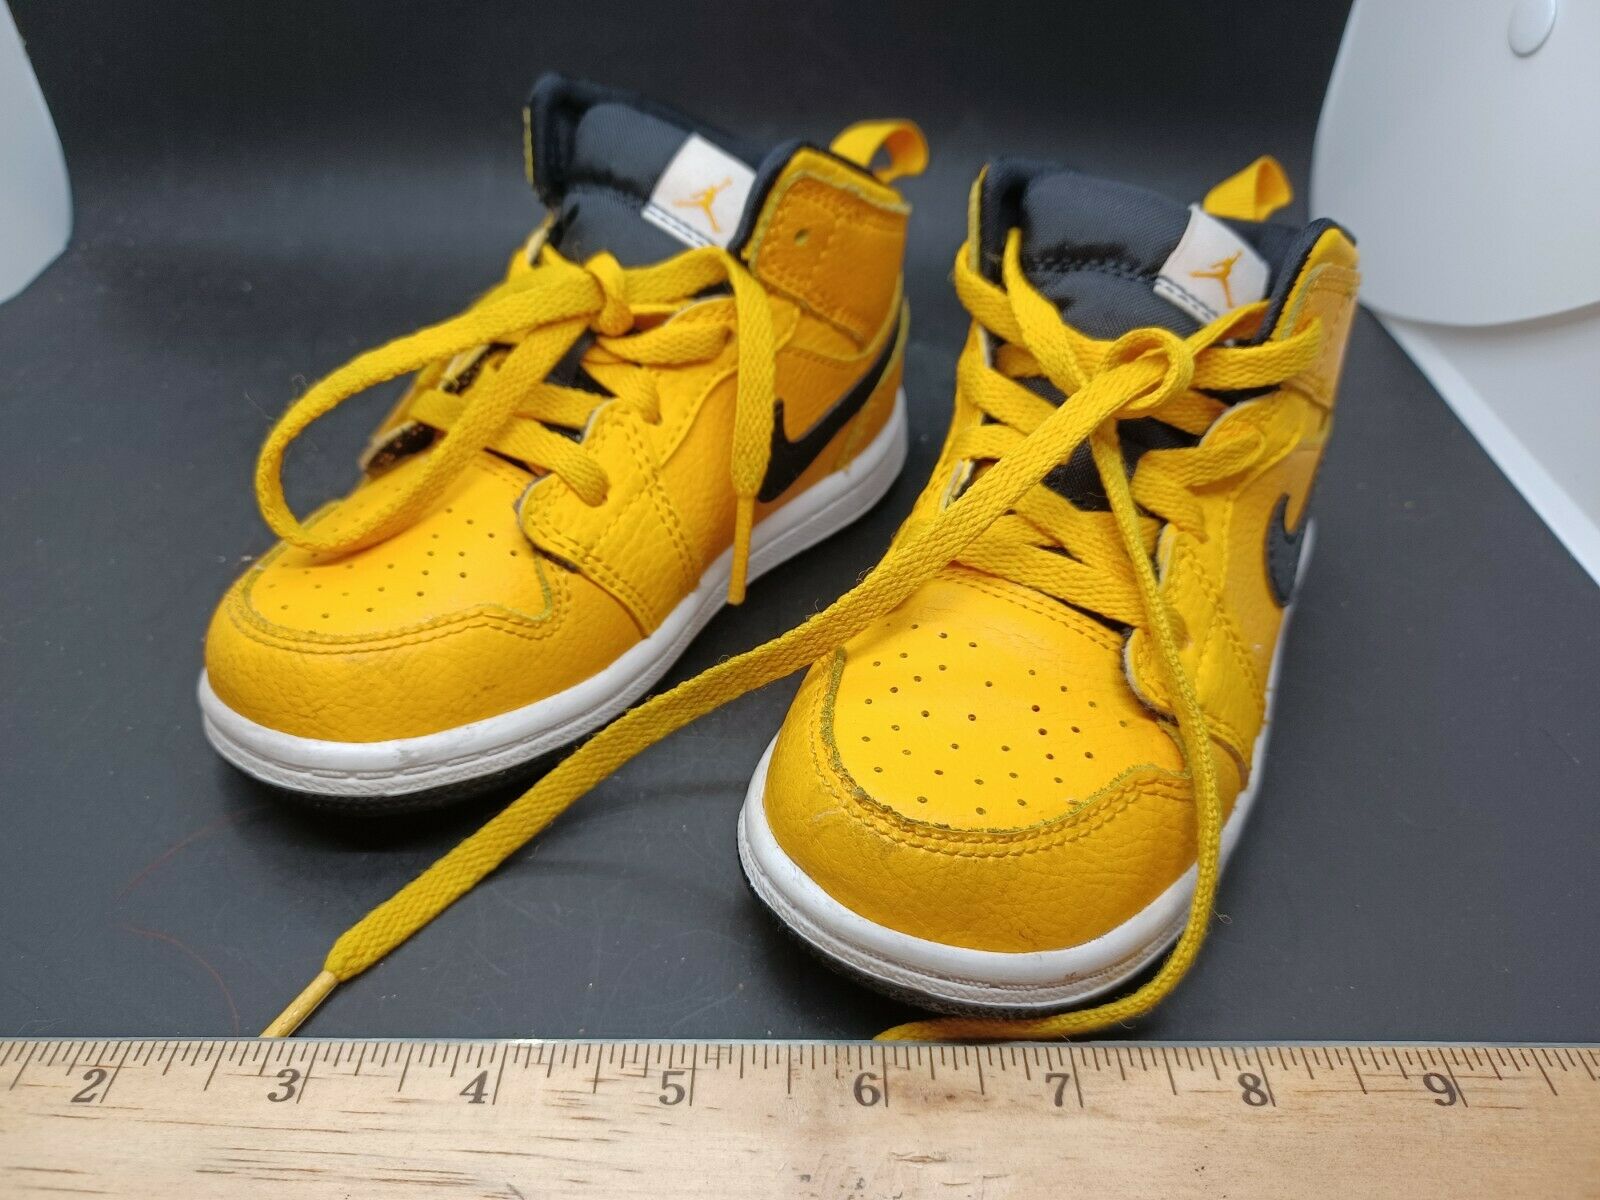 Nike Jordan 1 Mid Yellow Black White TD Toddler Size 8c Mid Shoes 640735-700